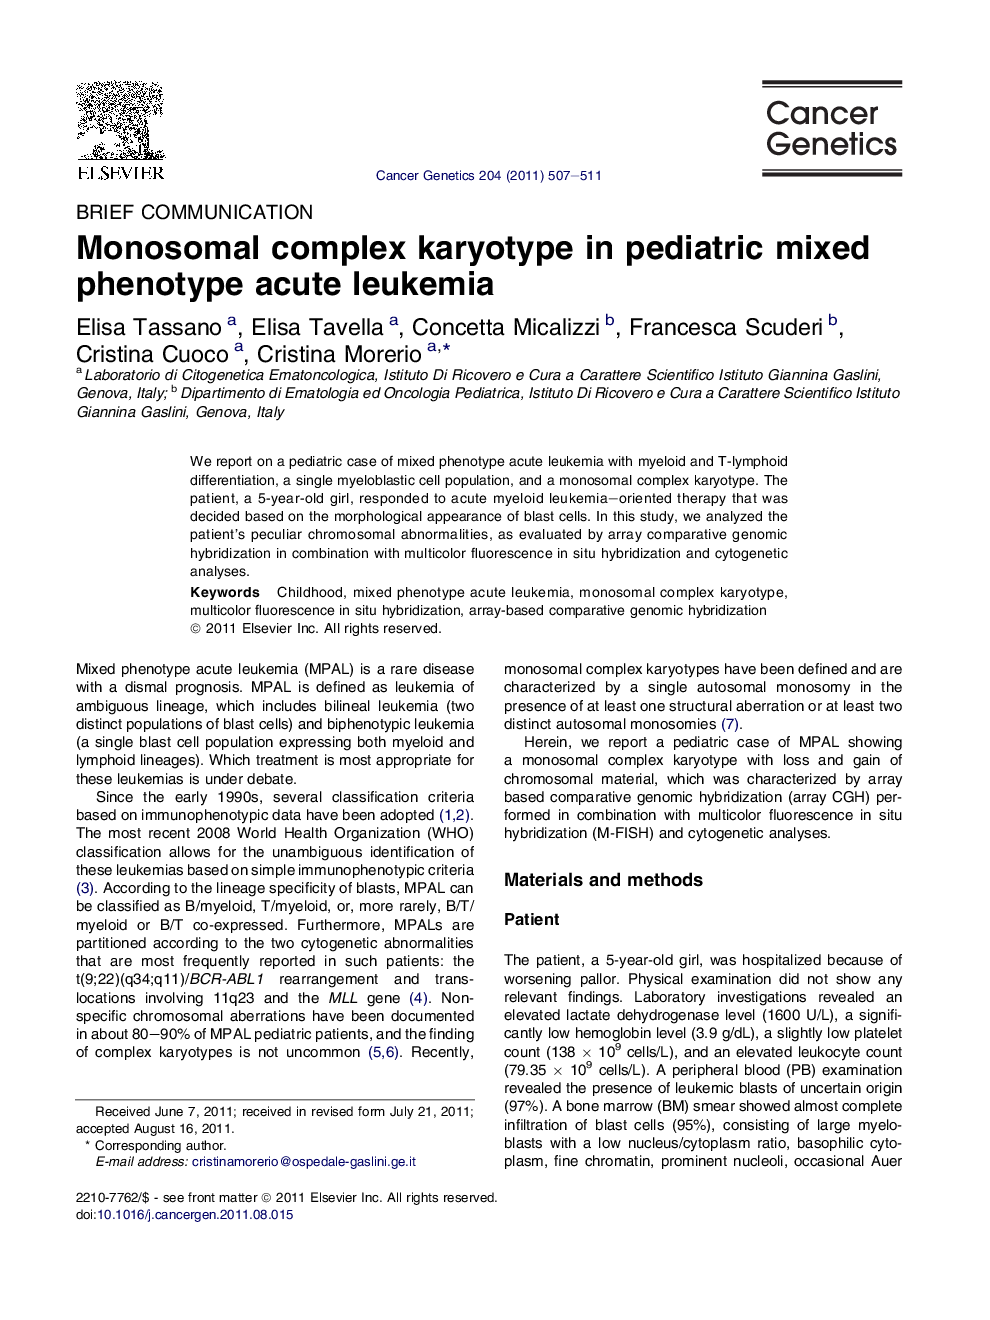 Monosomal complex karyotype in pediatric mixed phenotype acute leukemia